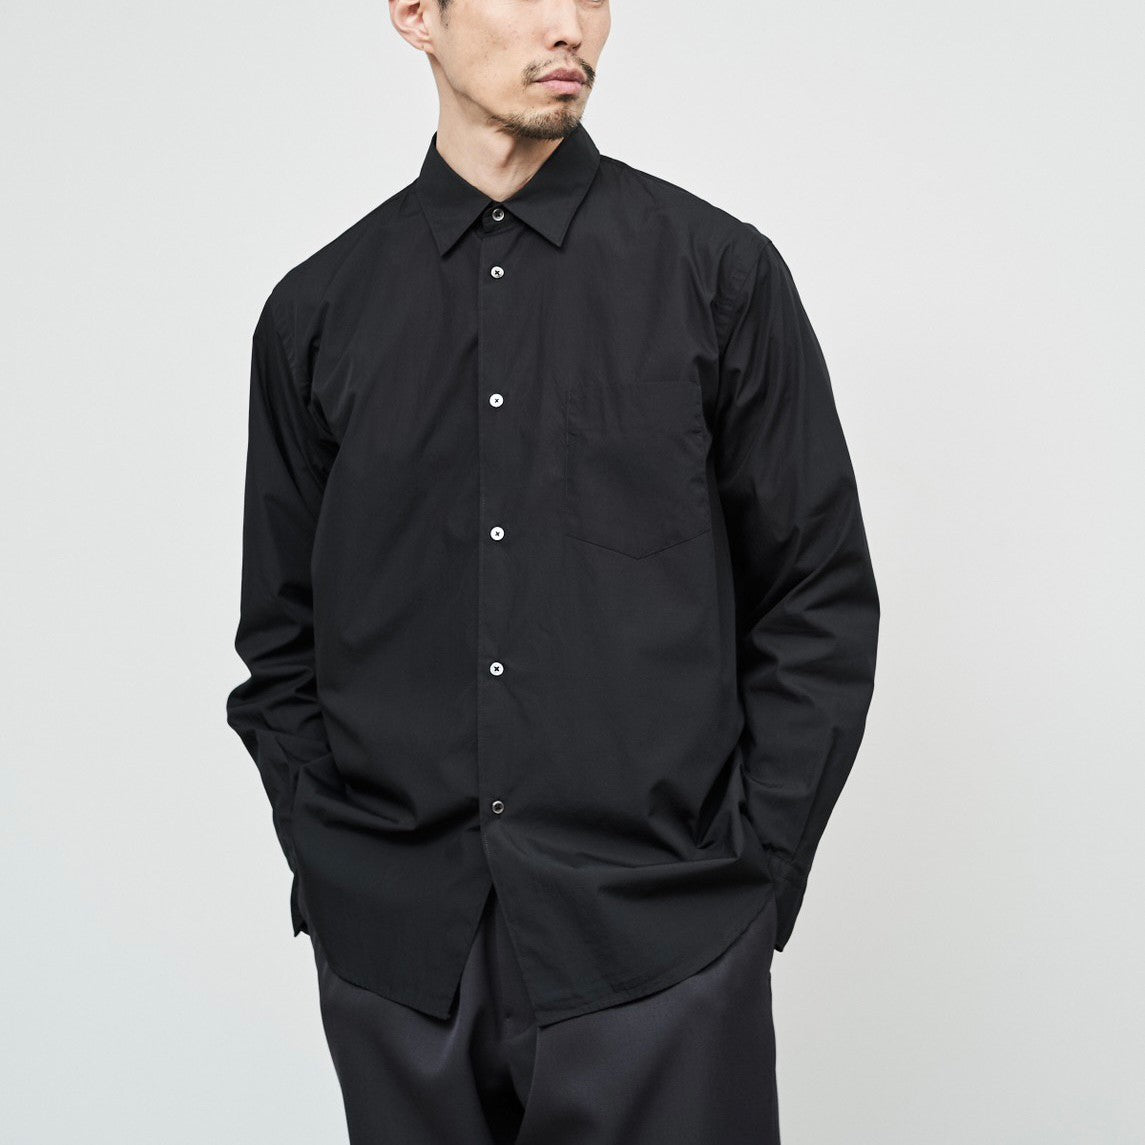 graphpaper Broad Os Regular Collar Shirt21000円でも大丈夫です